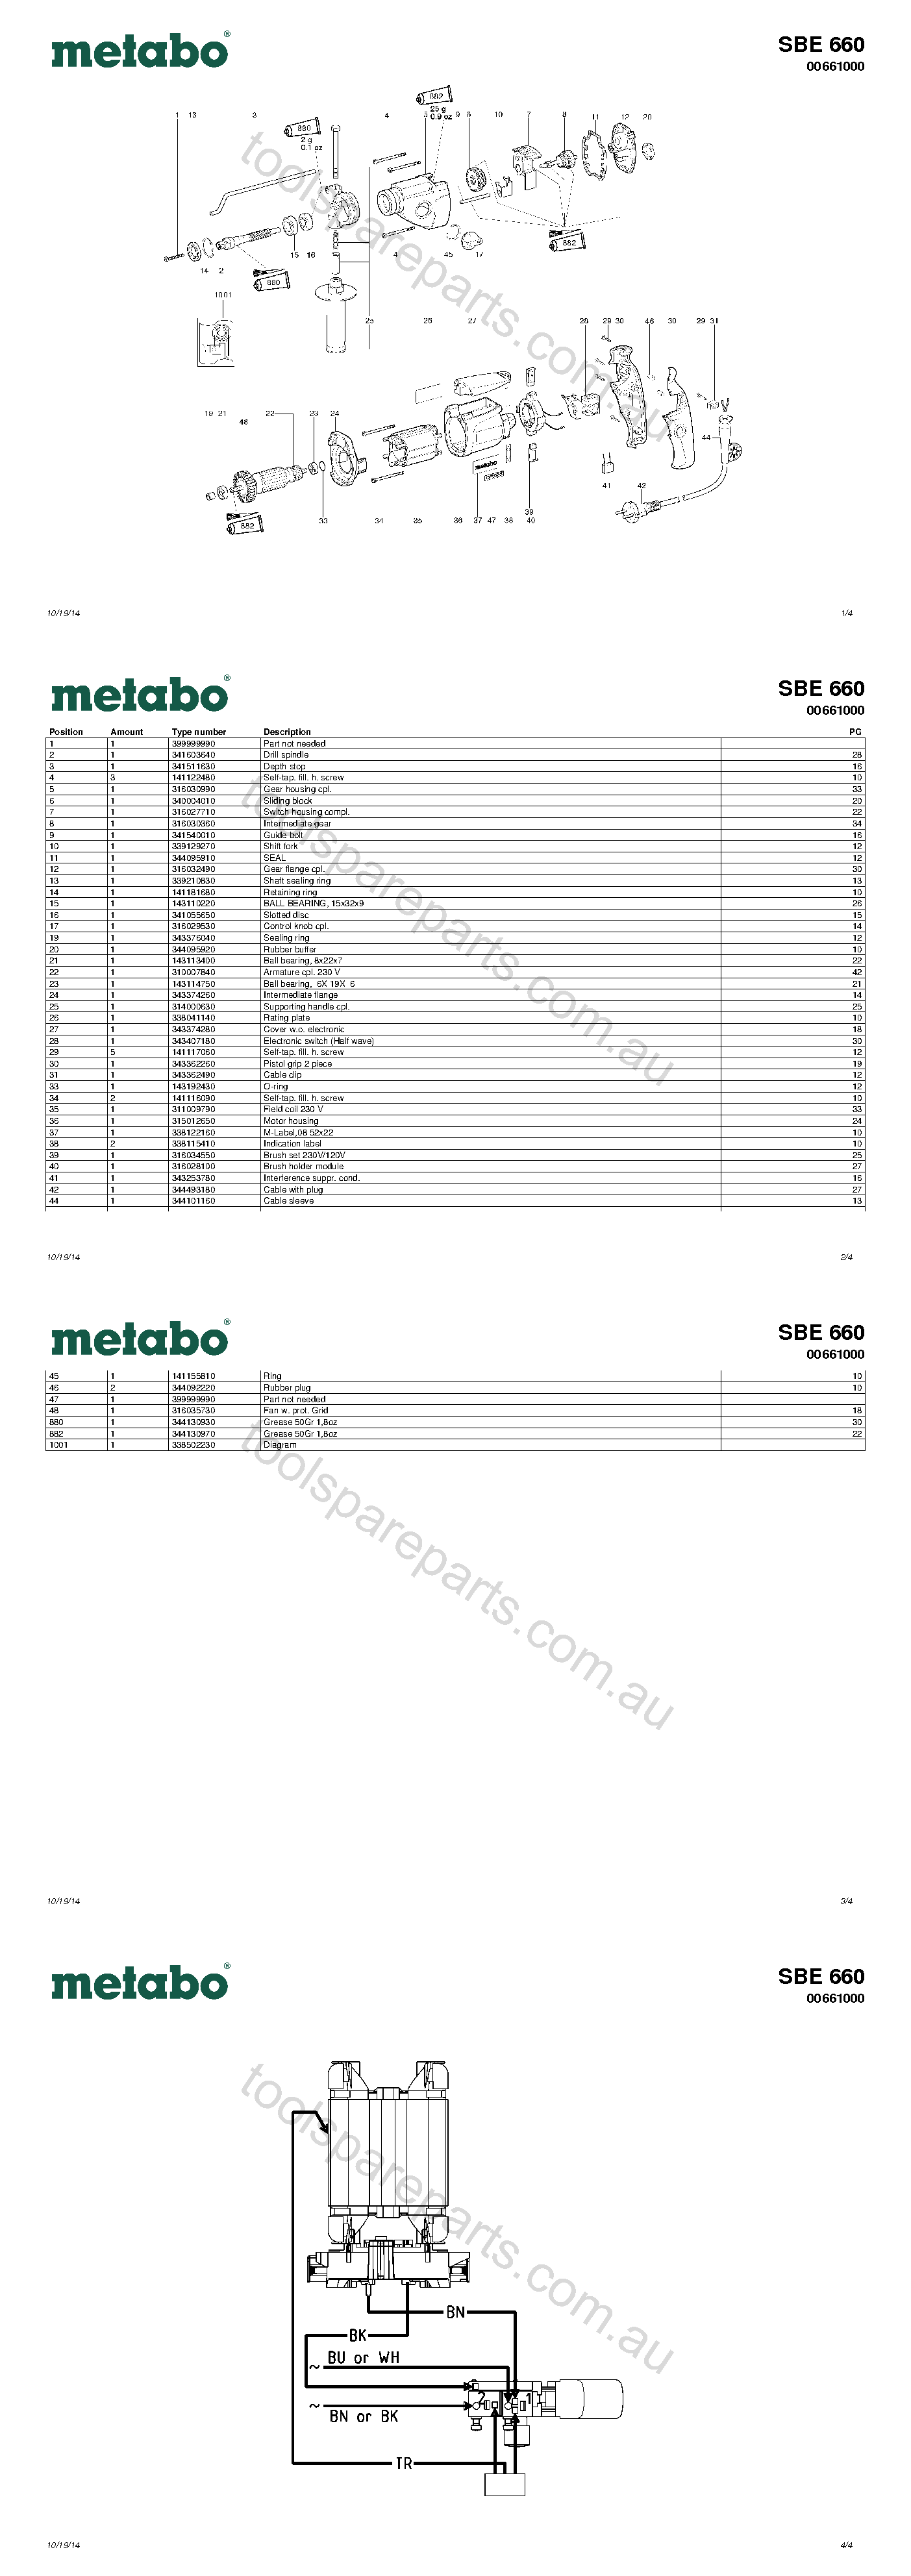 Metabo SBE 660 00661000  Diagram 1